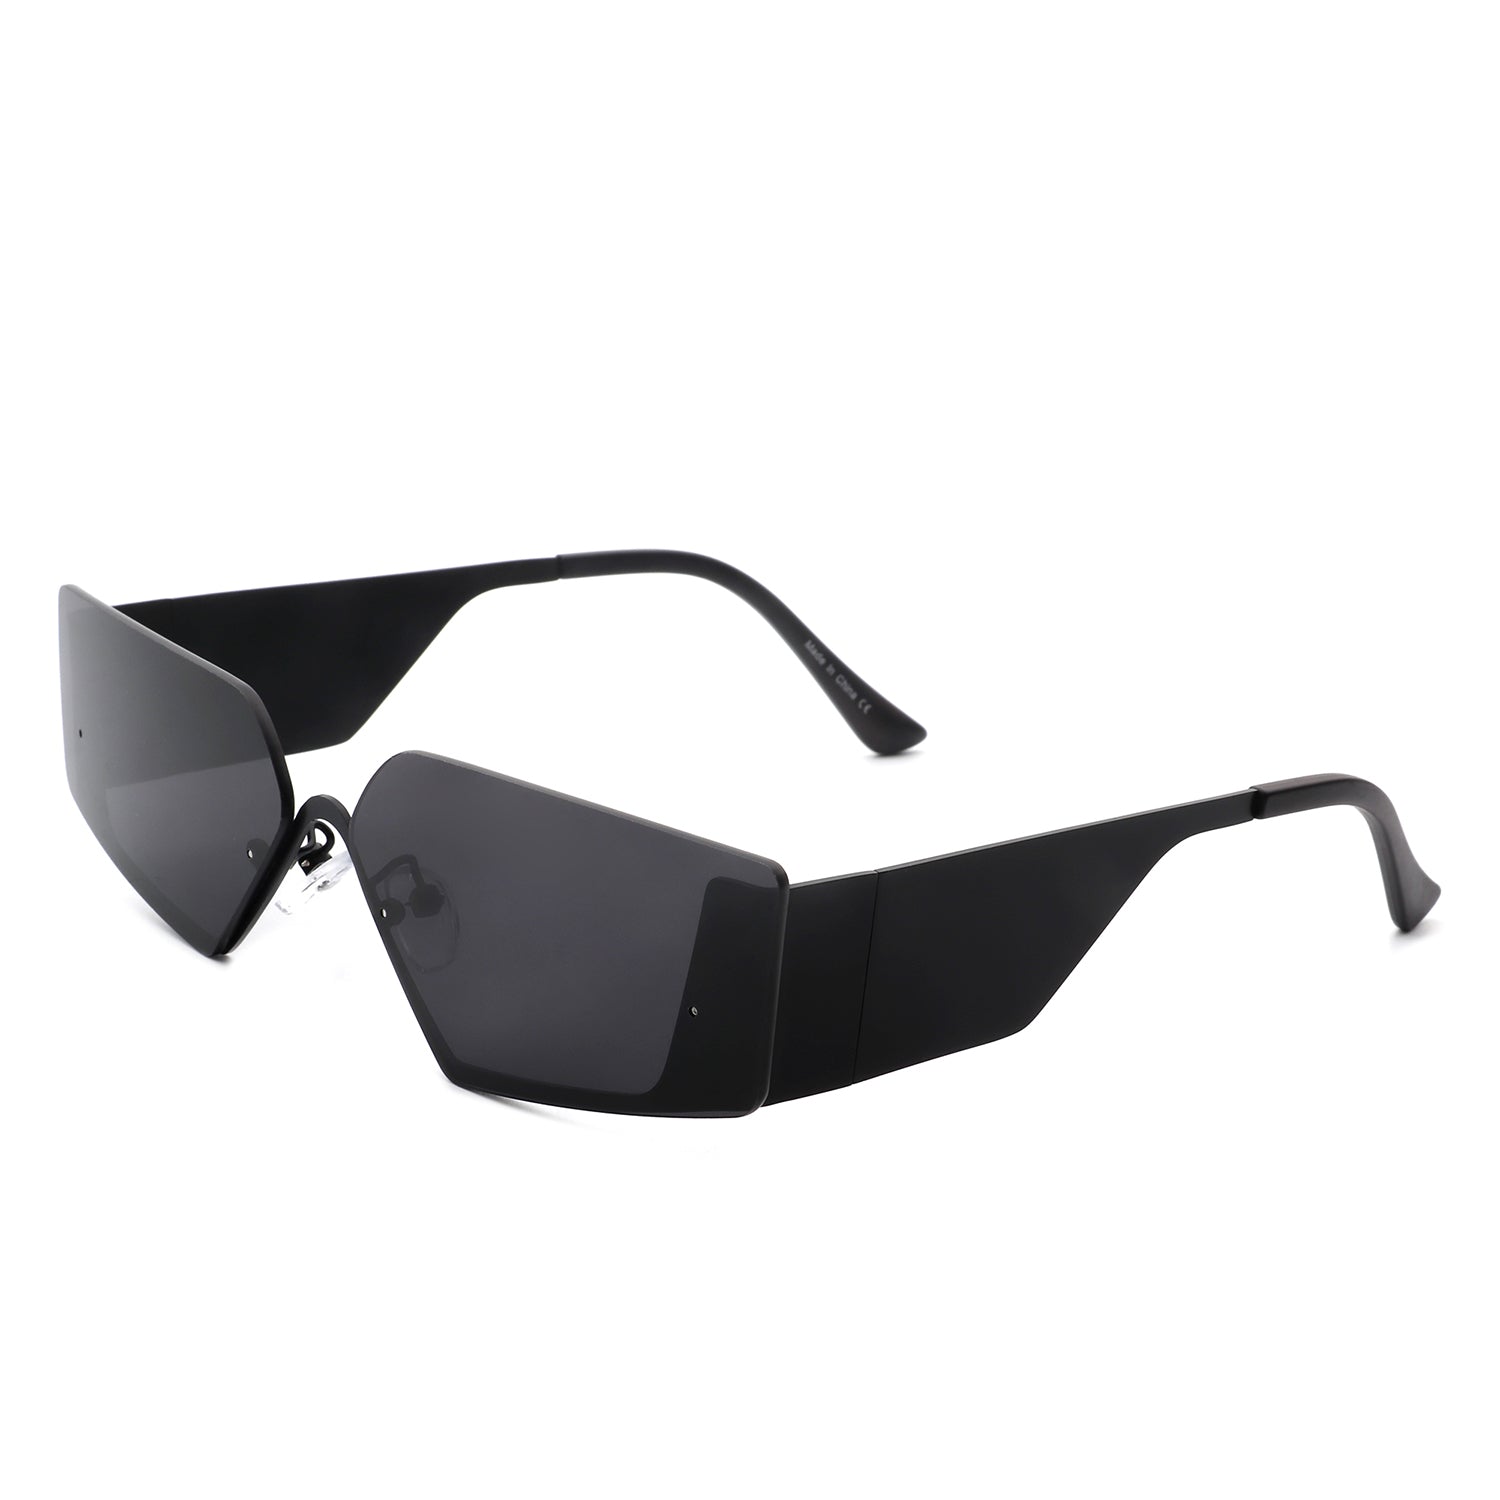 J2035 - Square Geometric Rimless Irregular Frameless Fashion Sunglasses